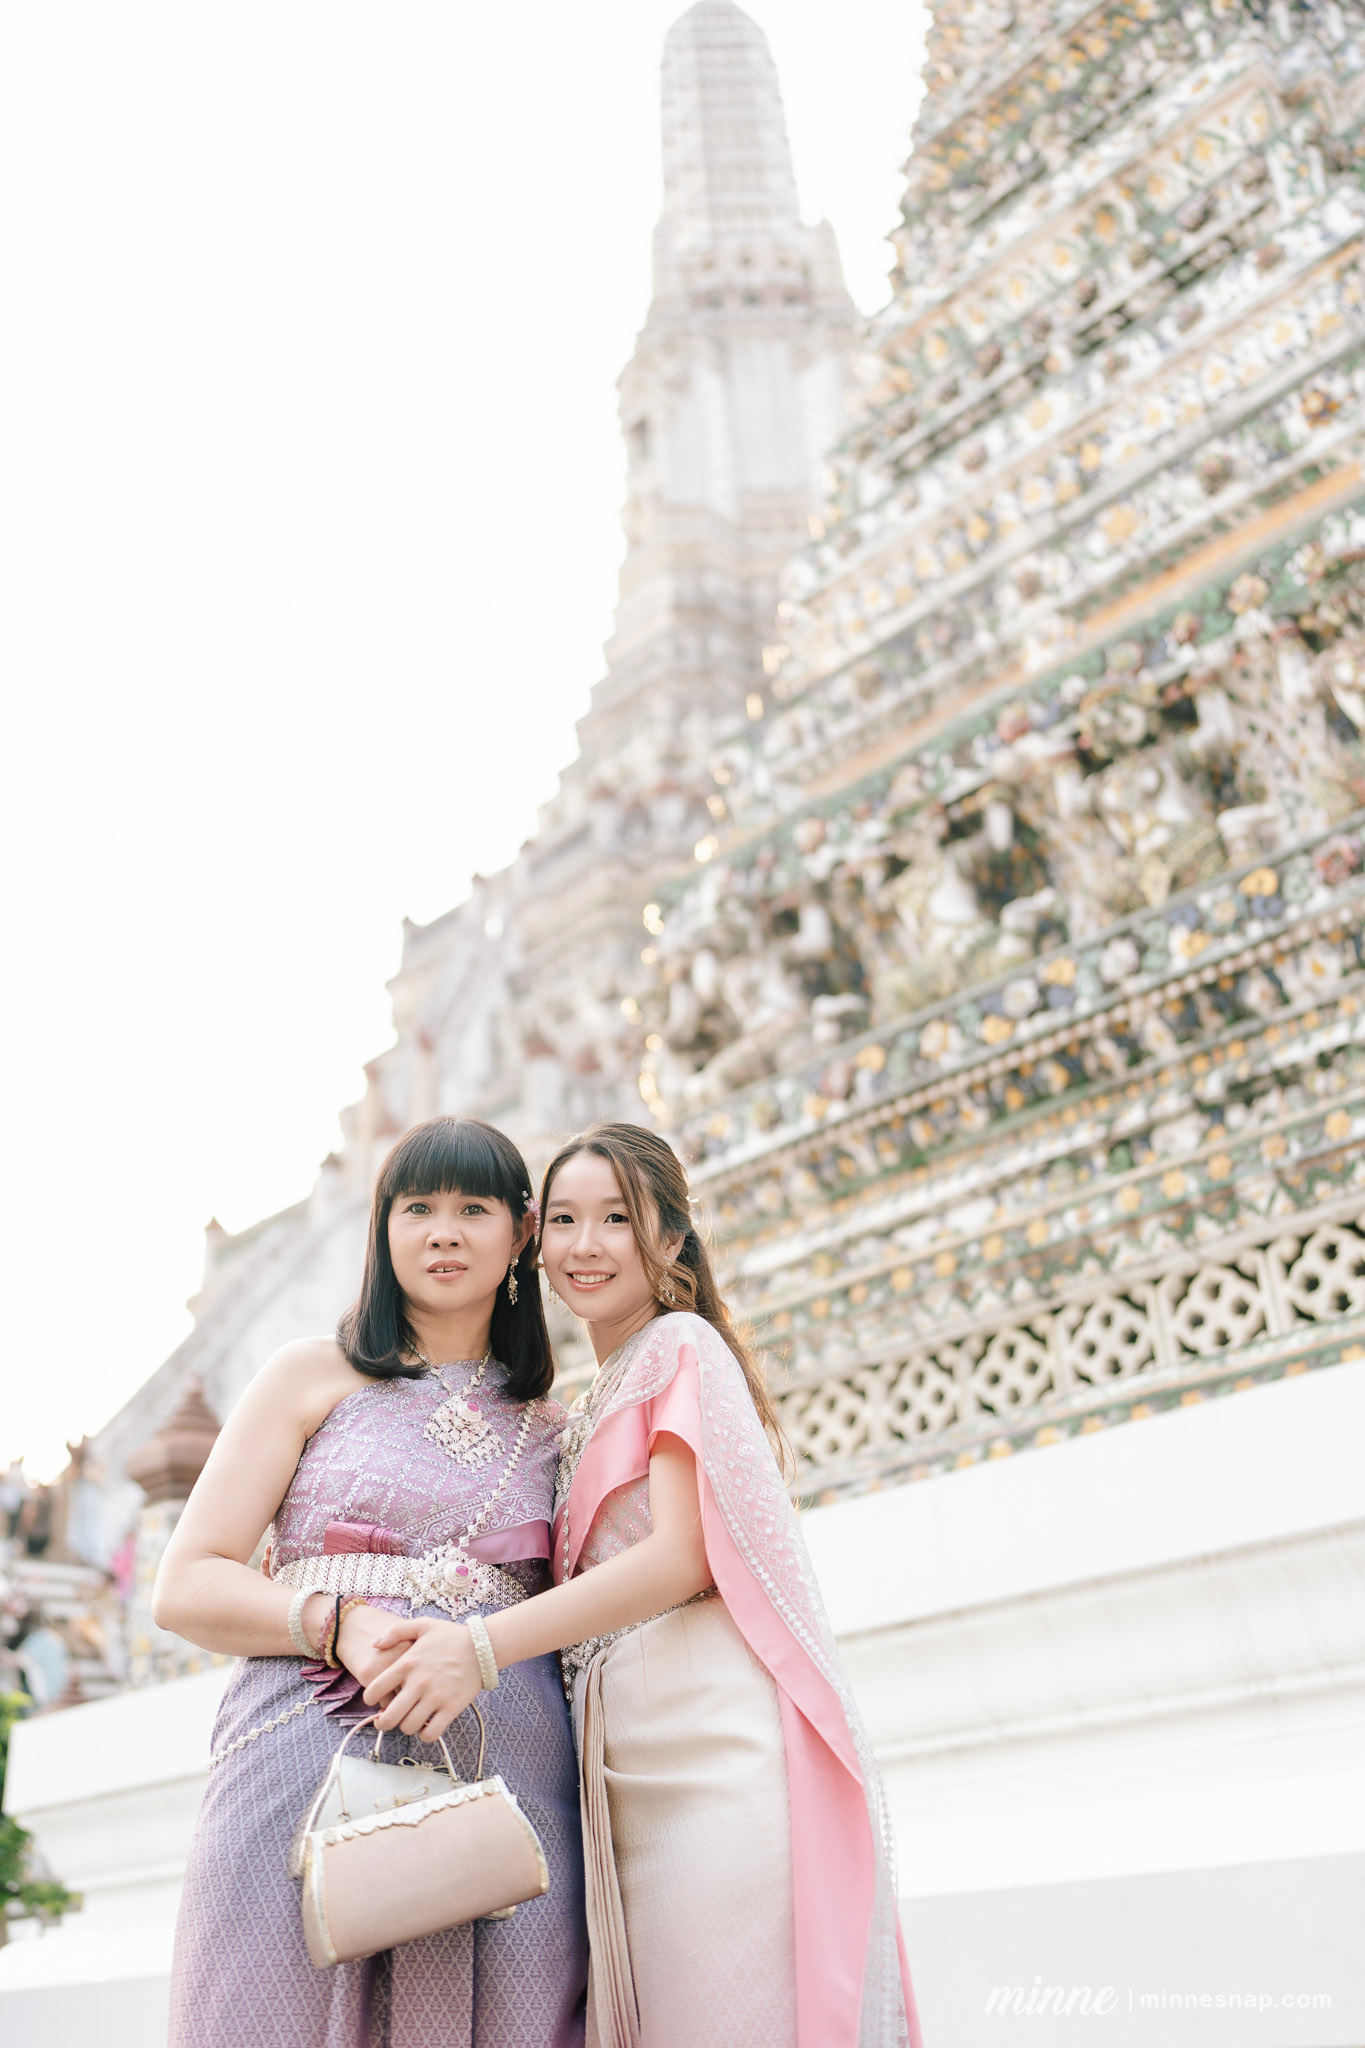 Sense Of Thai - Thai Costume Dress photoshoot at Wat Arun